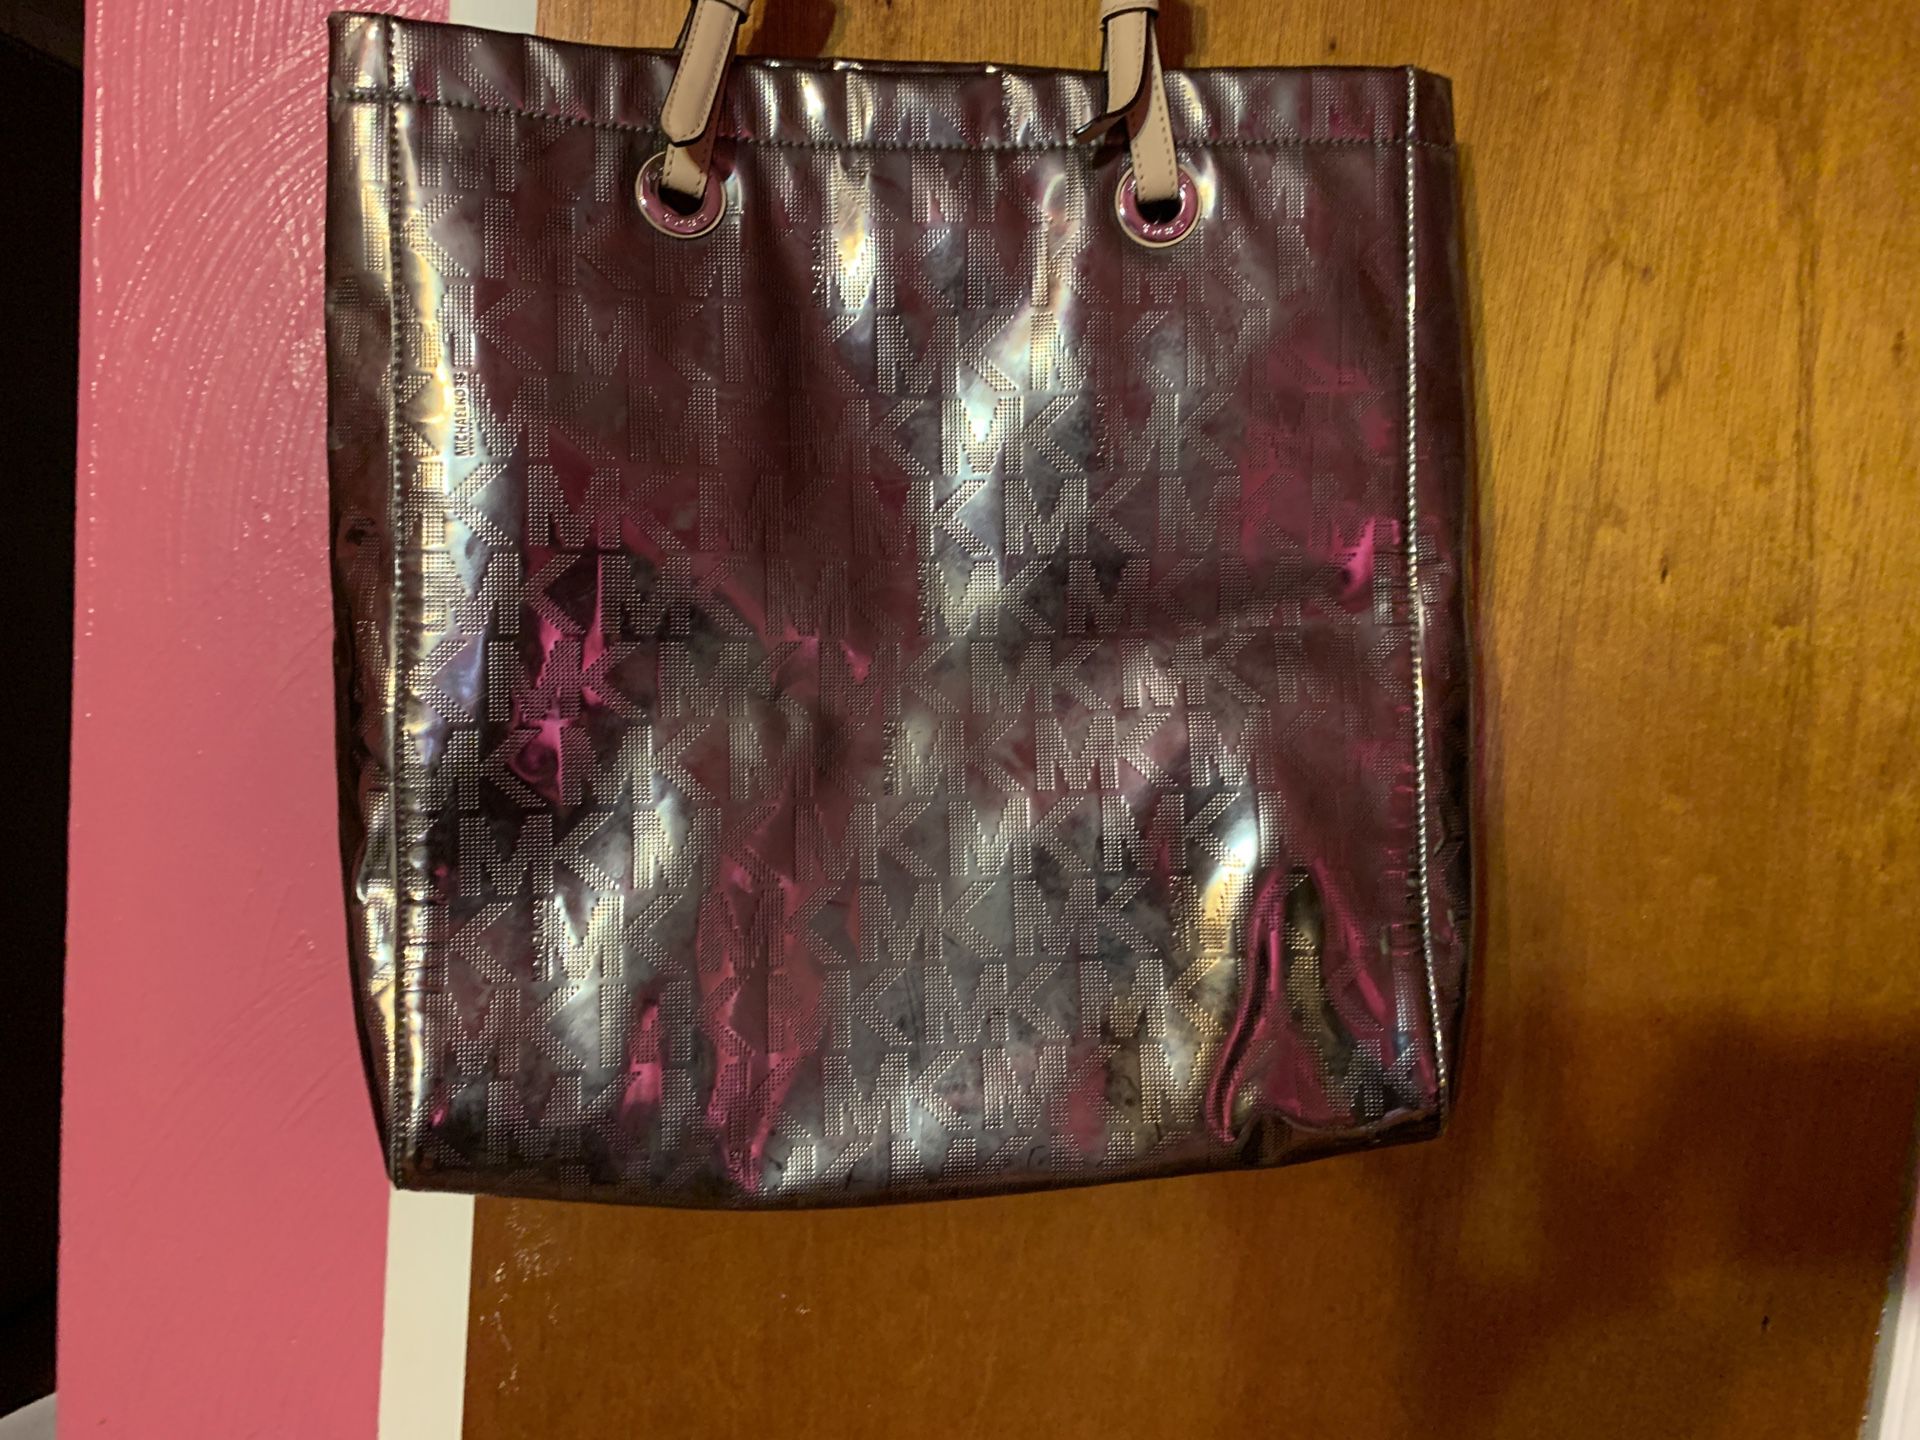 Michael Kors leather metallic tote bag. OBO